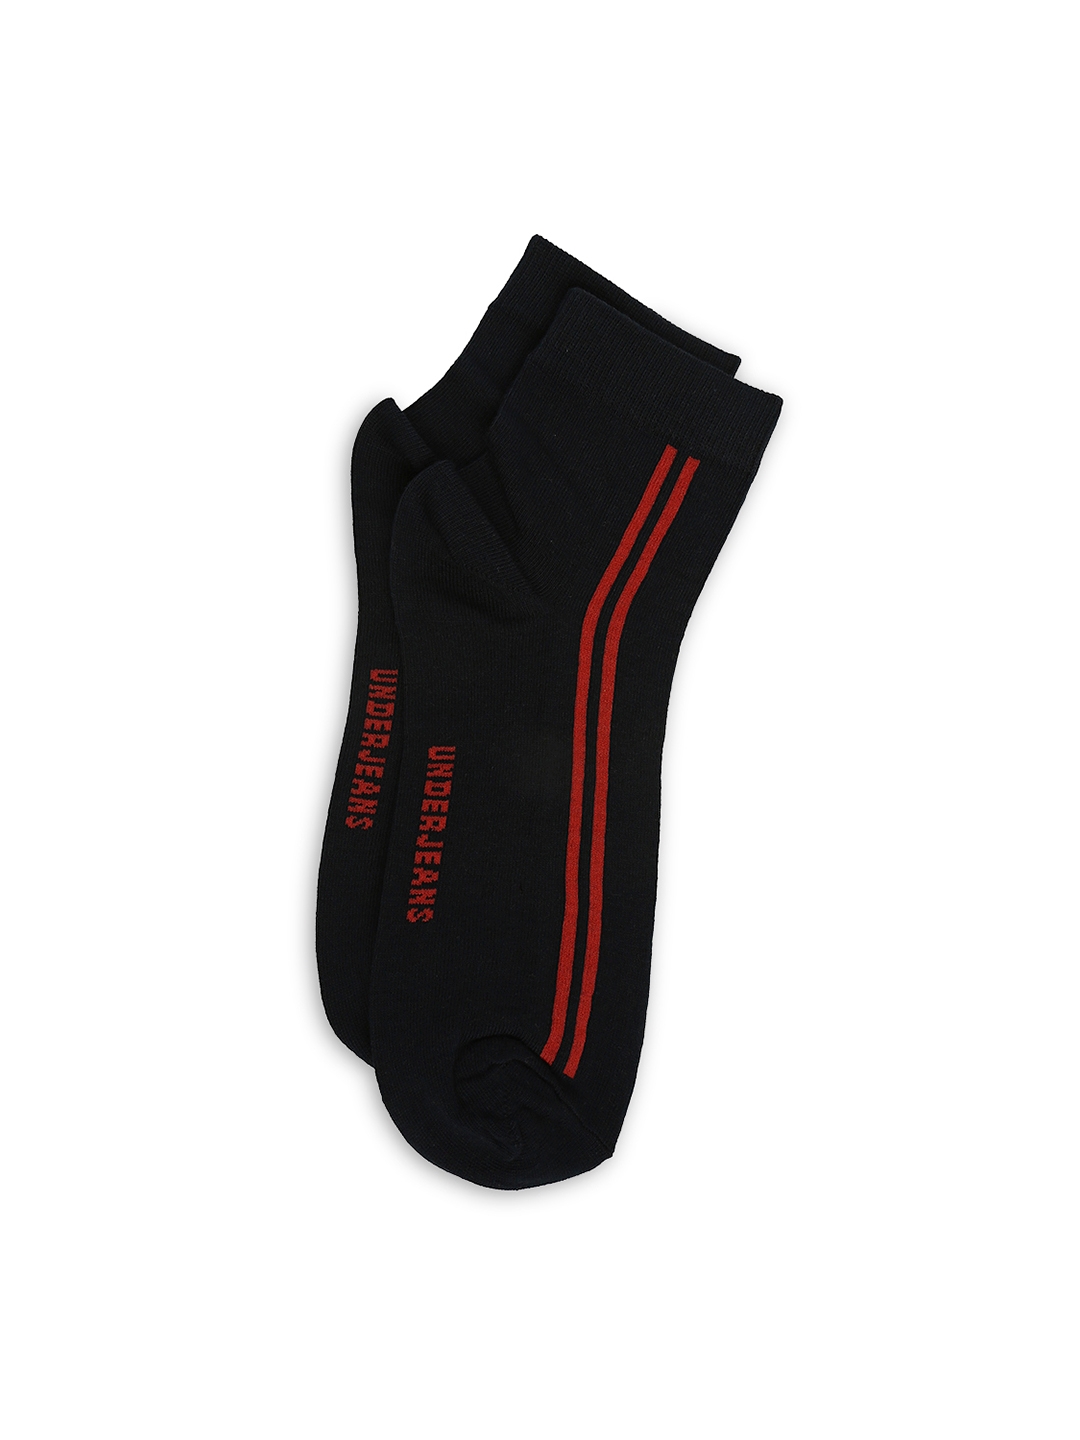 spykar | Underjeans by Spykar Premium Navy & Grey Melange Ankle Length Socks - Pack Of 2 6